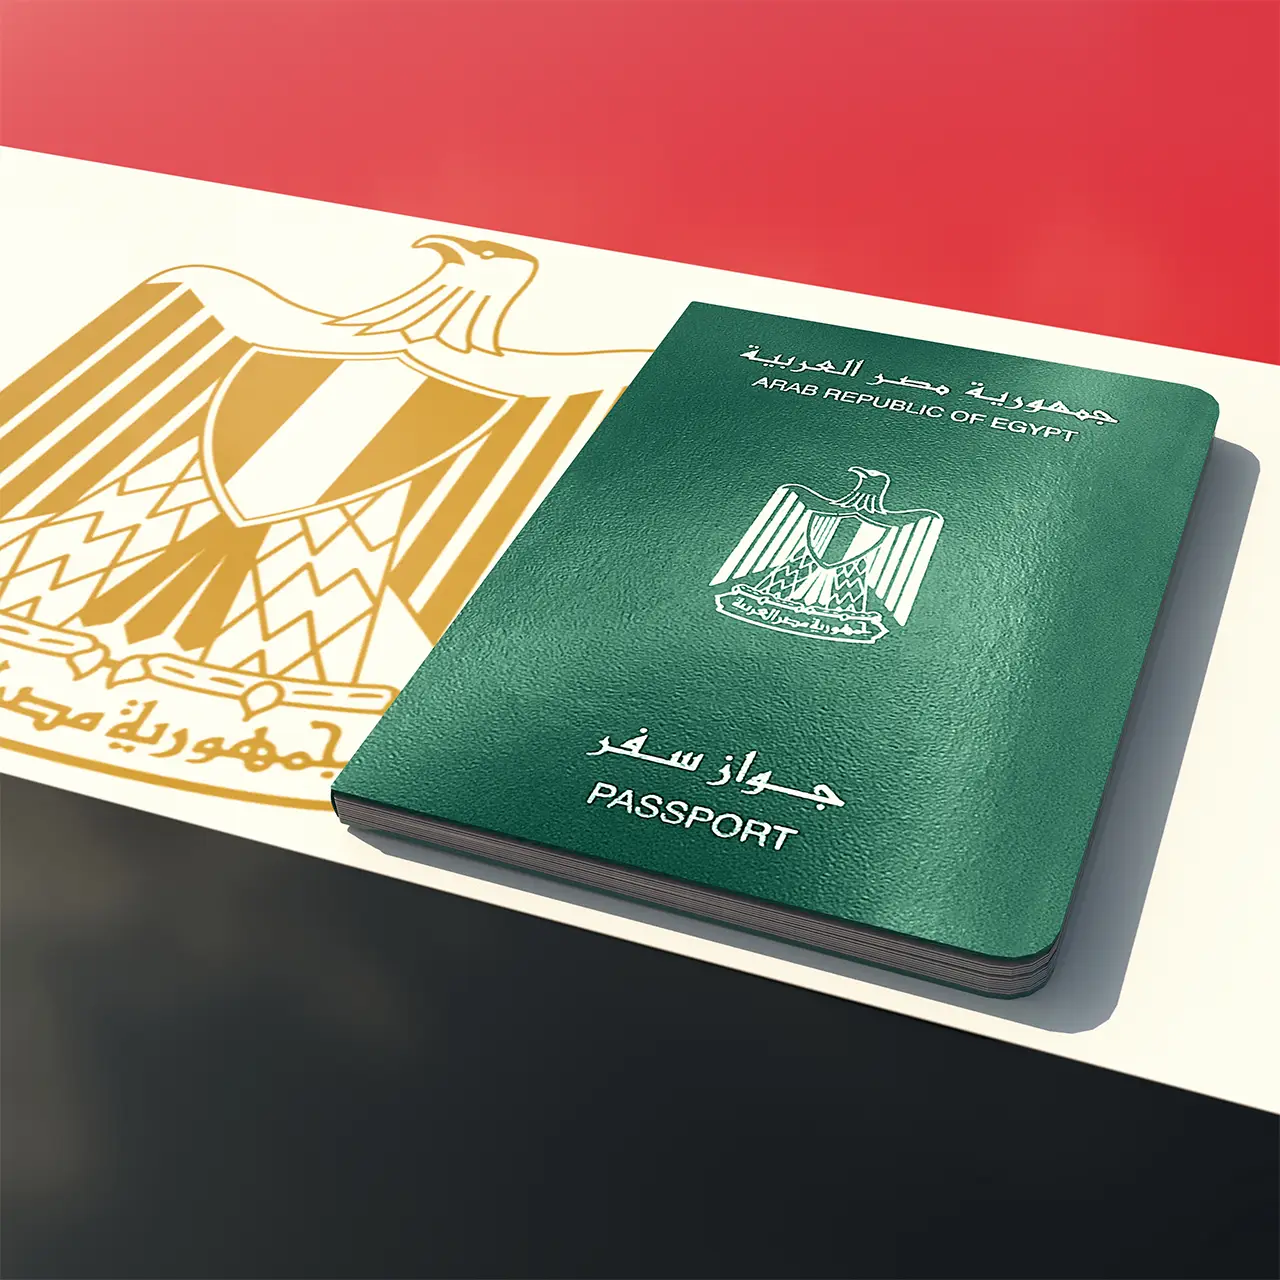 travel to egypt passport validity